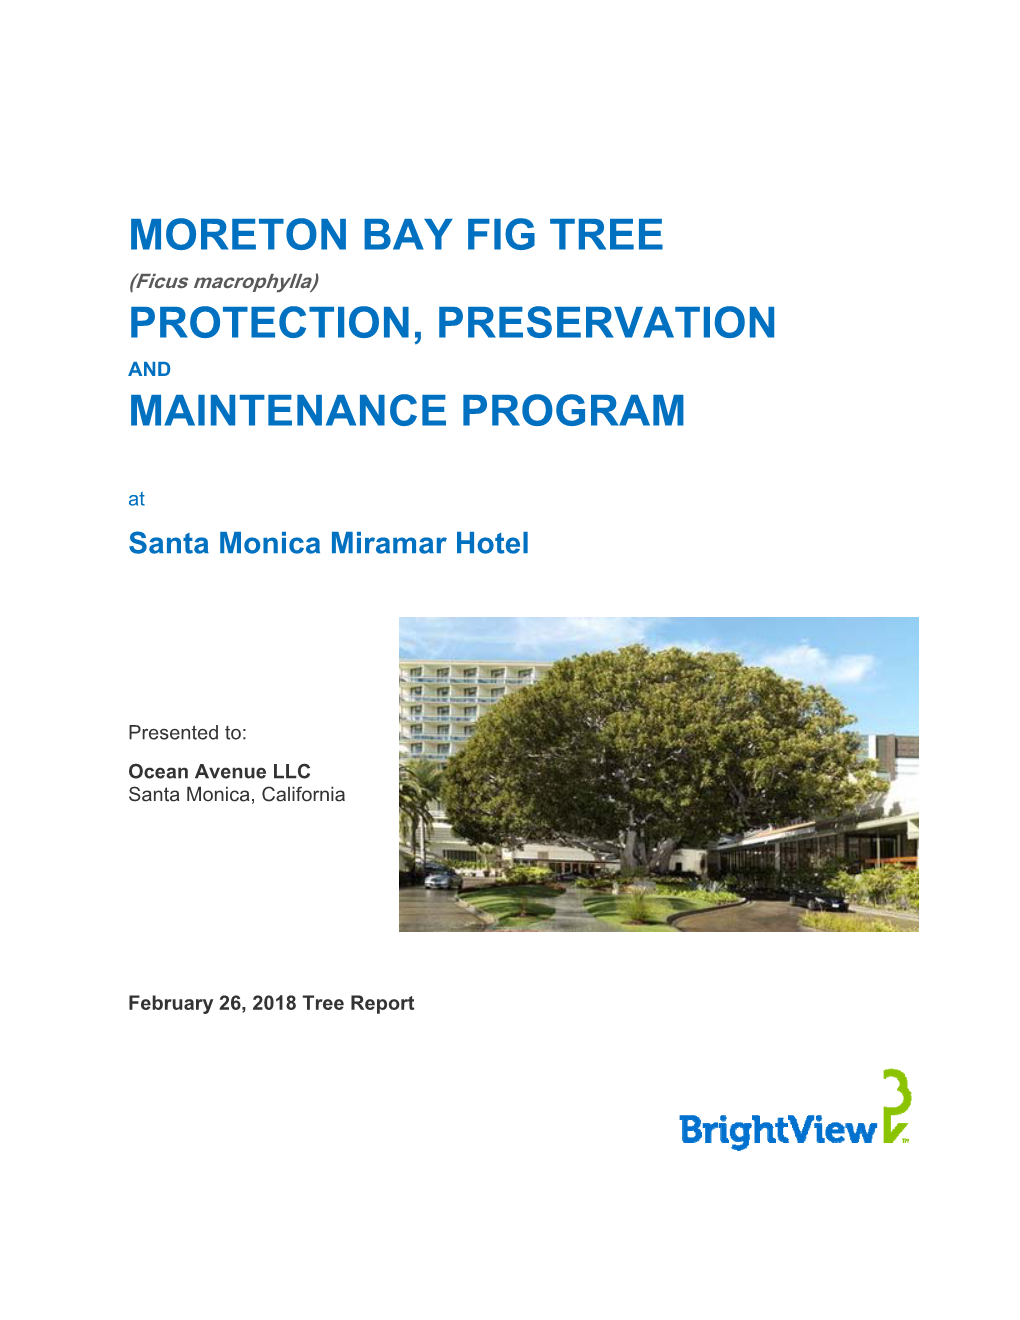 Moreton Bay Fig Tree Protection, Preservation Maintenance Program